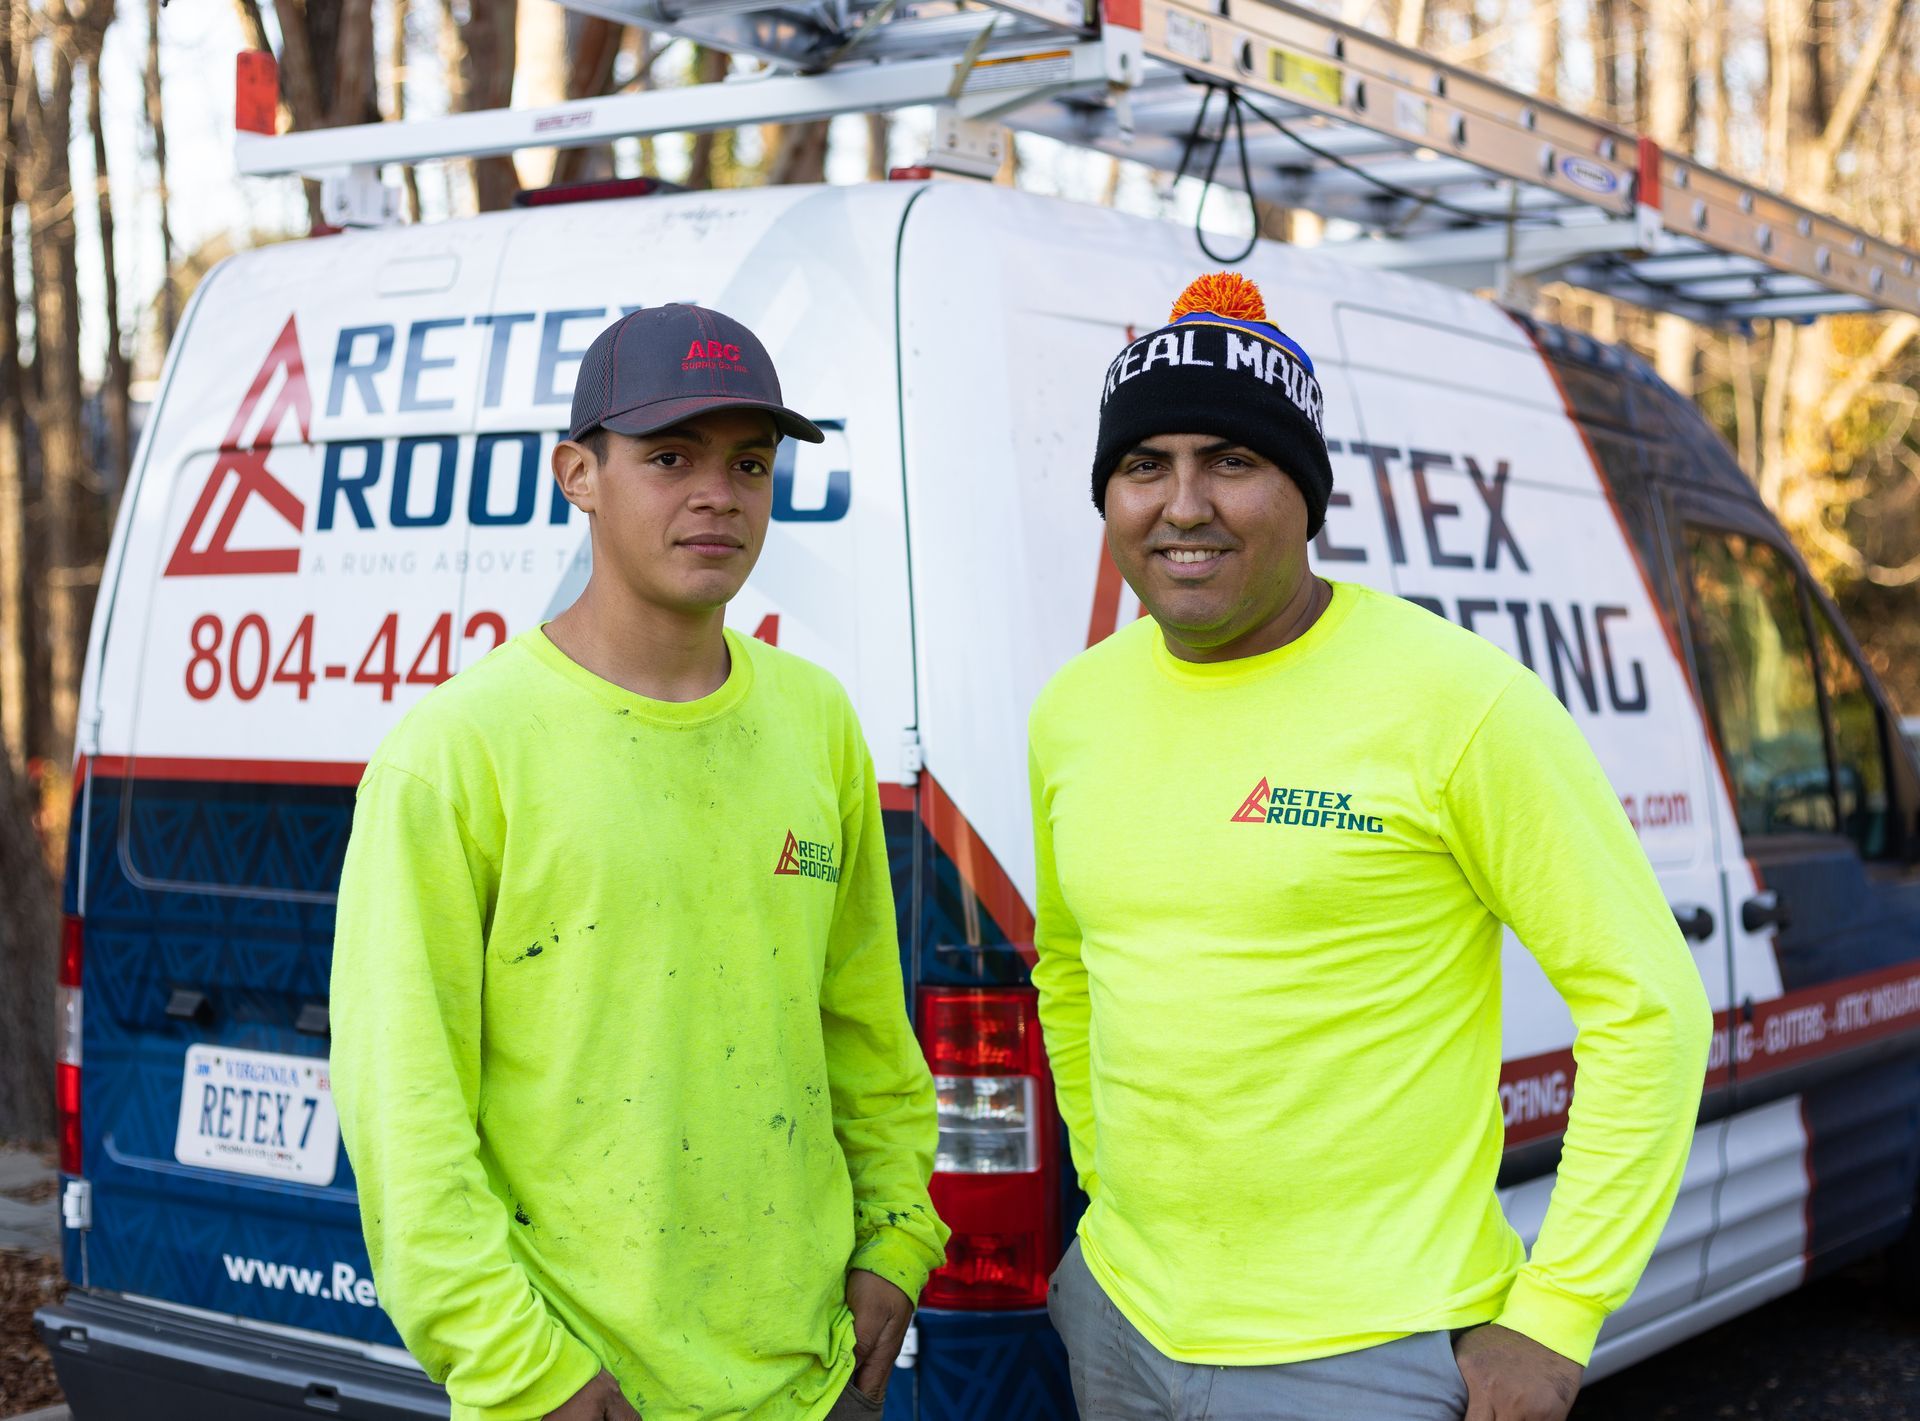 Meet Retex's Repair Team: Bryan Rizo (L) and Julio Marin Castillo (R).